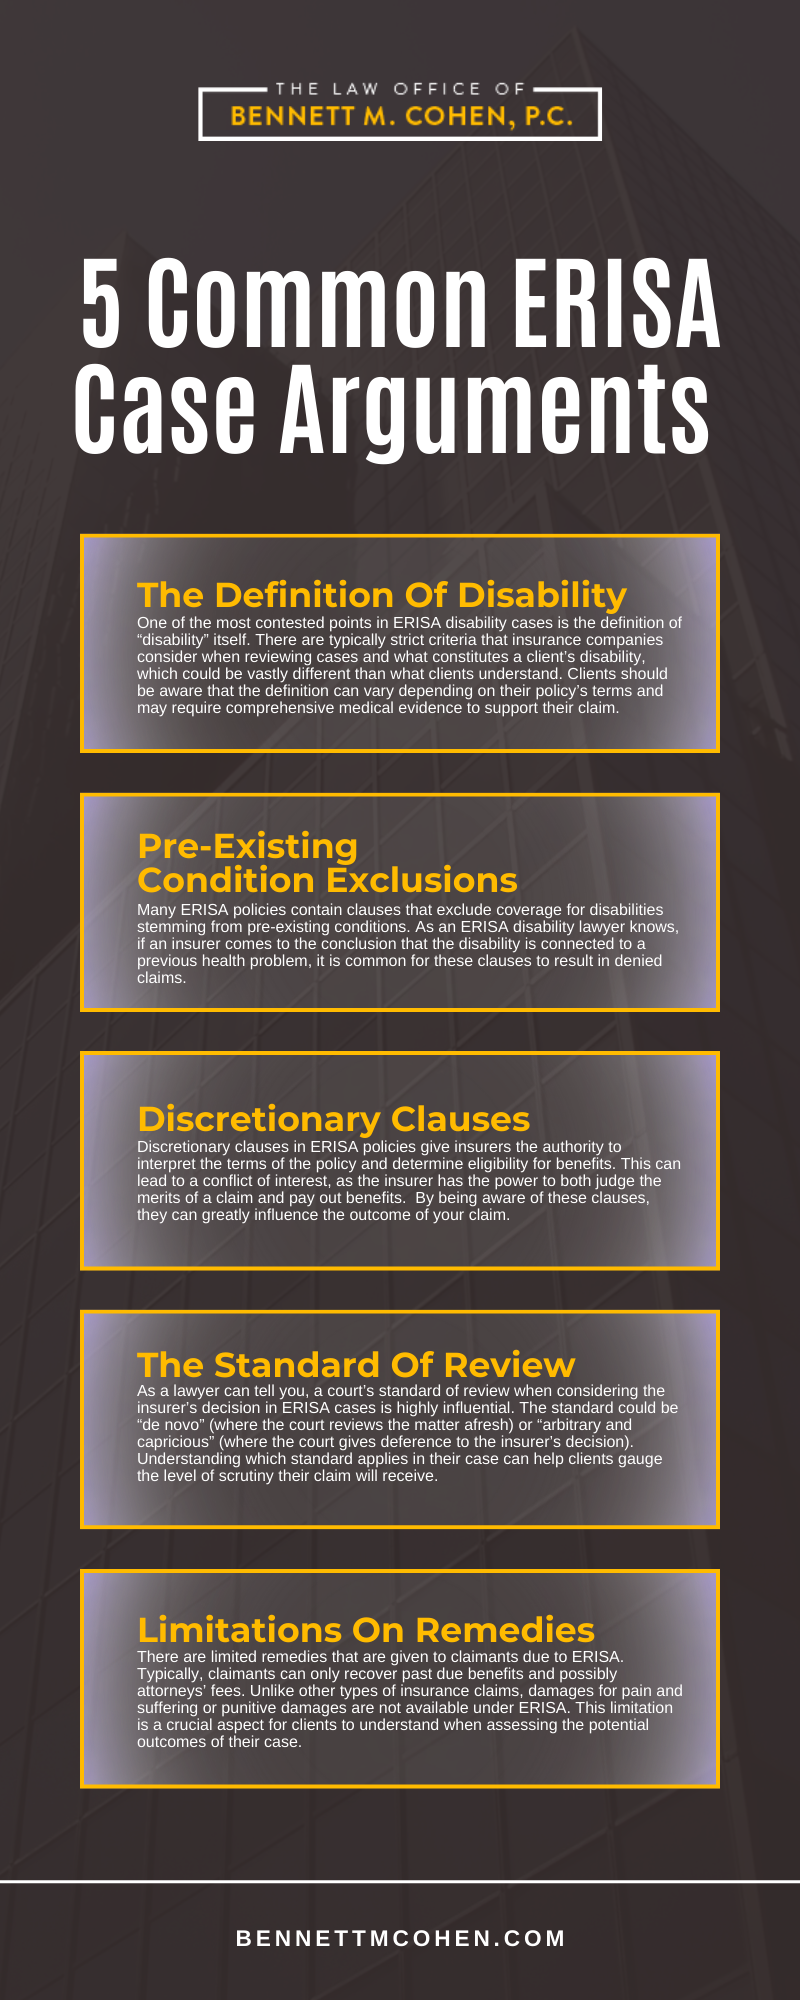 5 Common ERISA Case Arguments Infographic